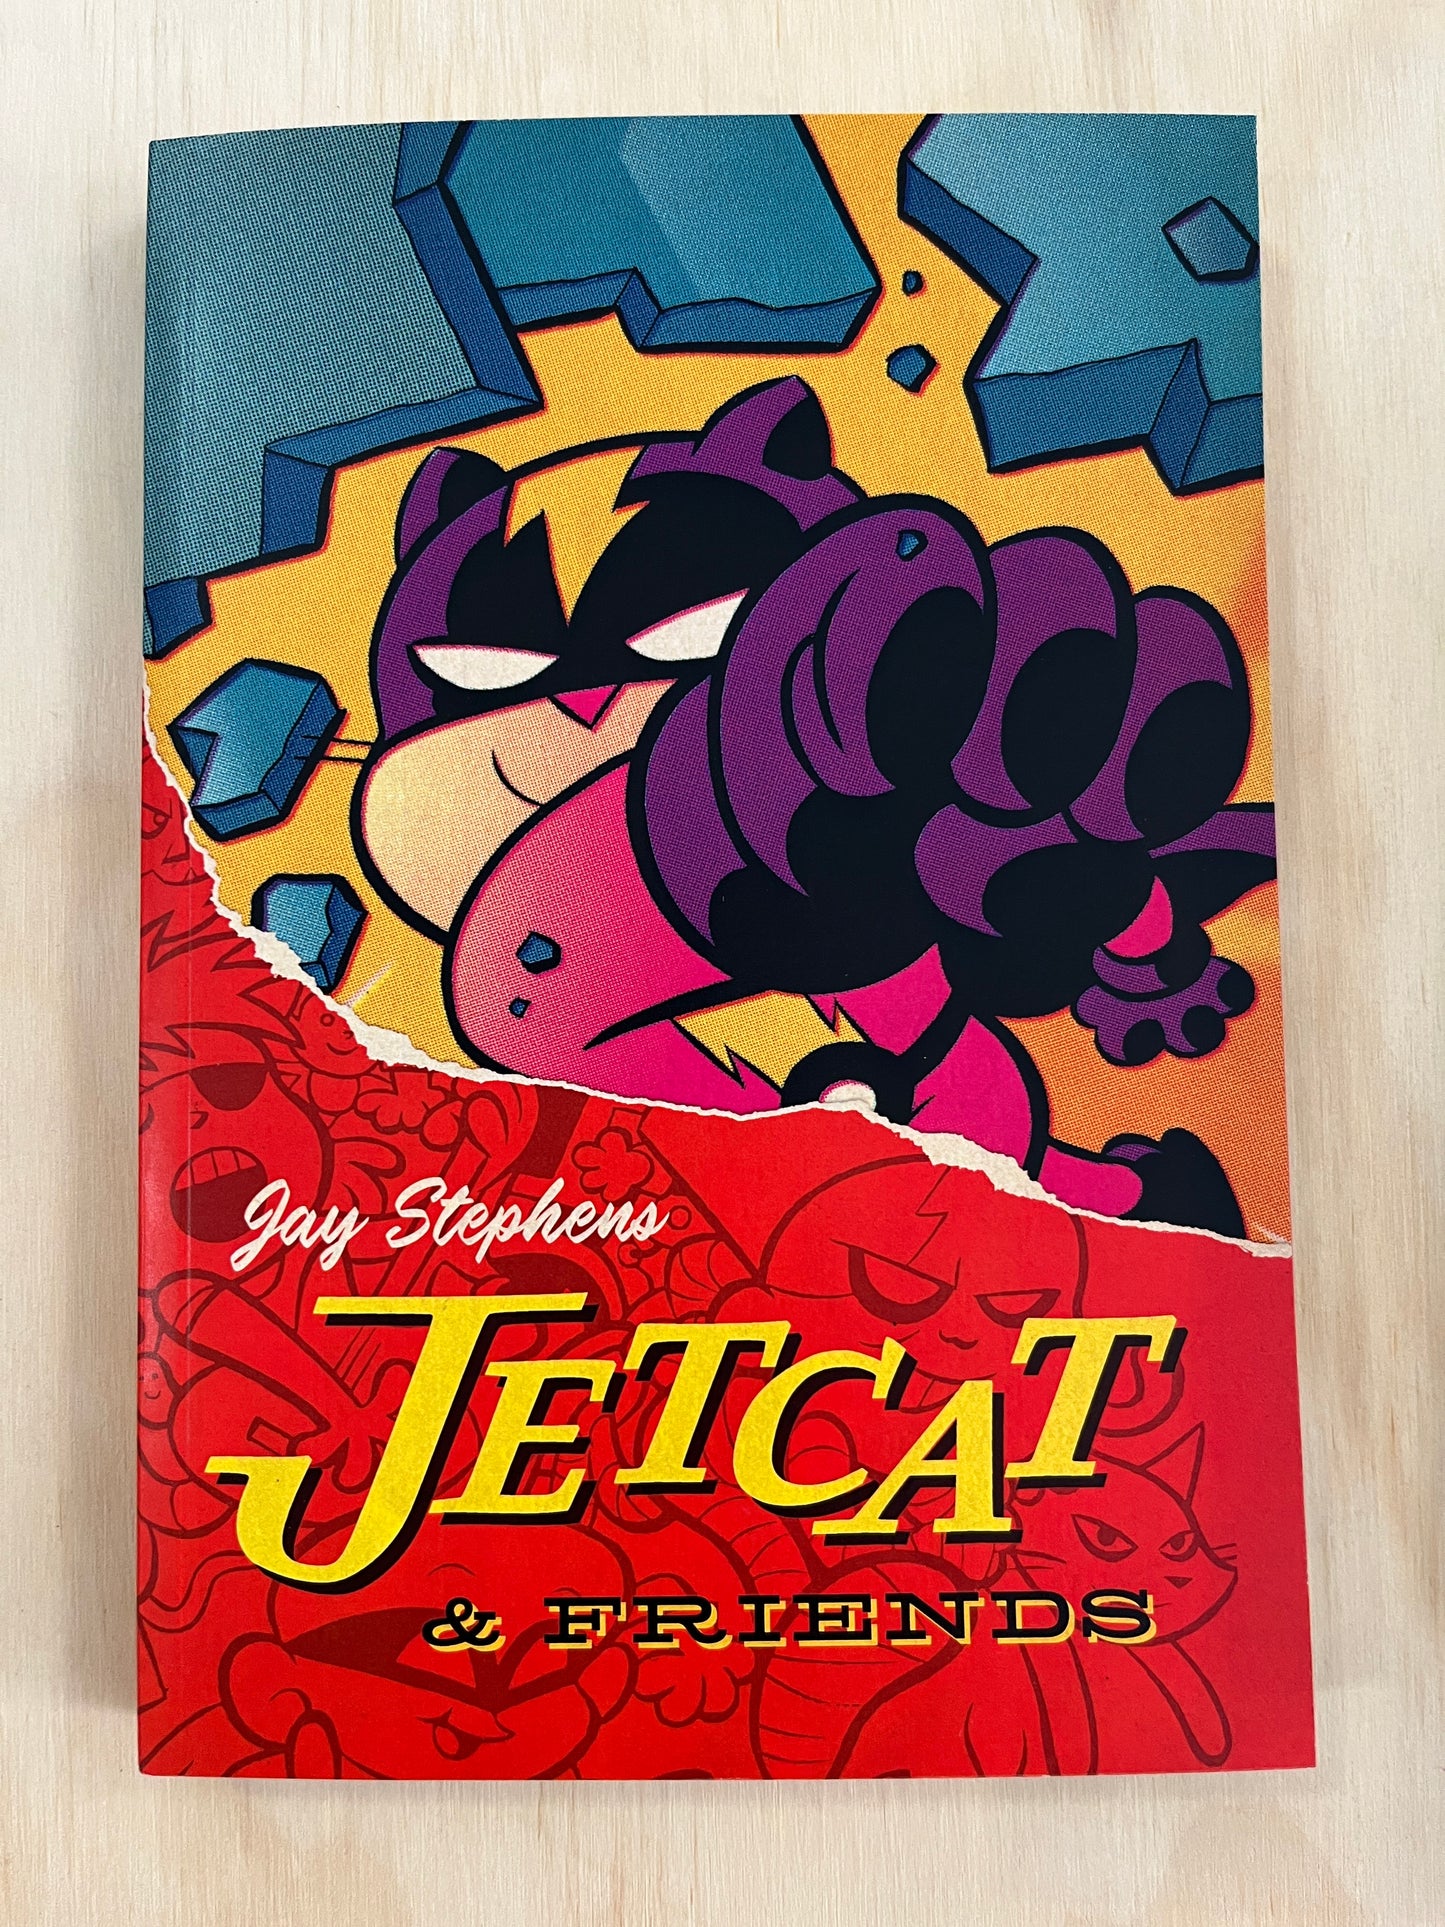 Jetcat & Friends